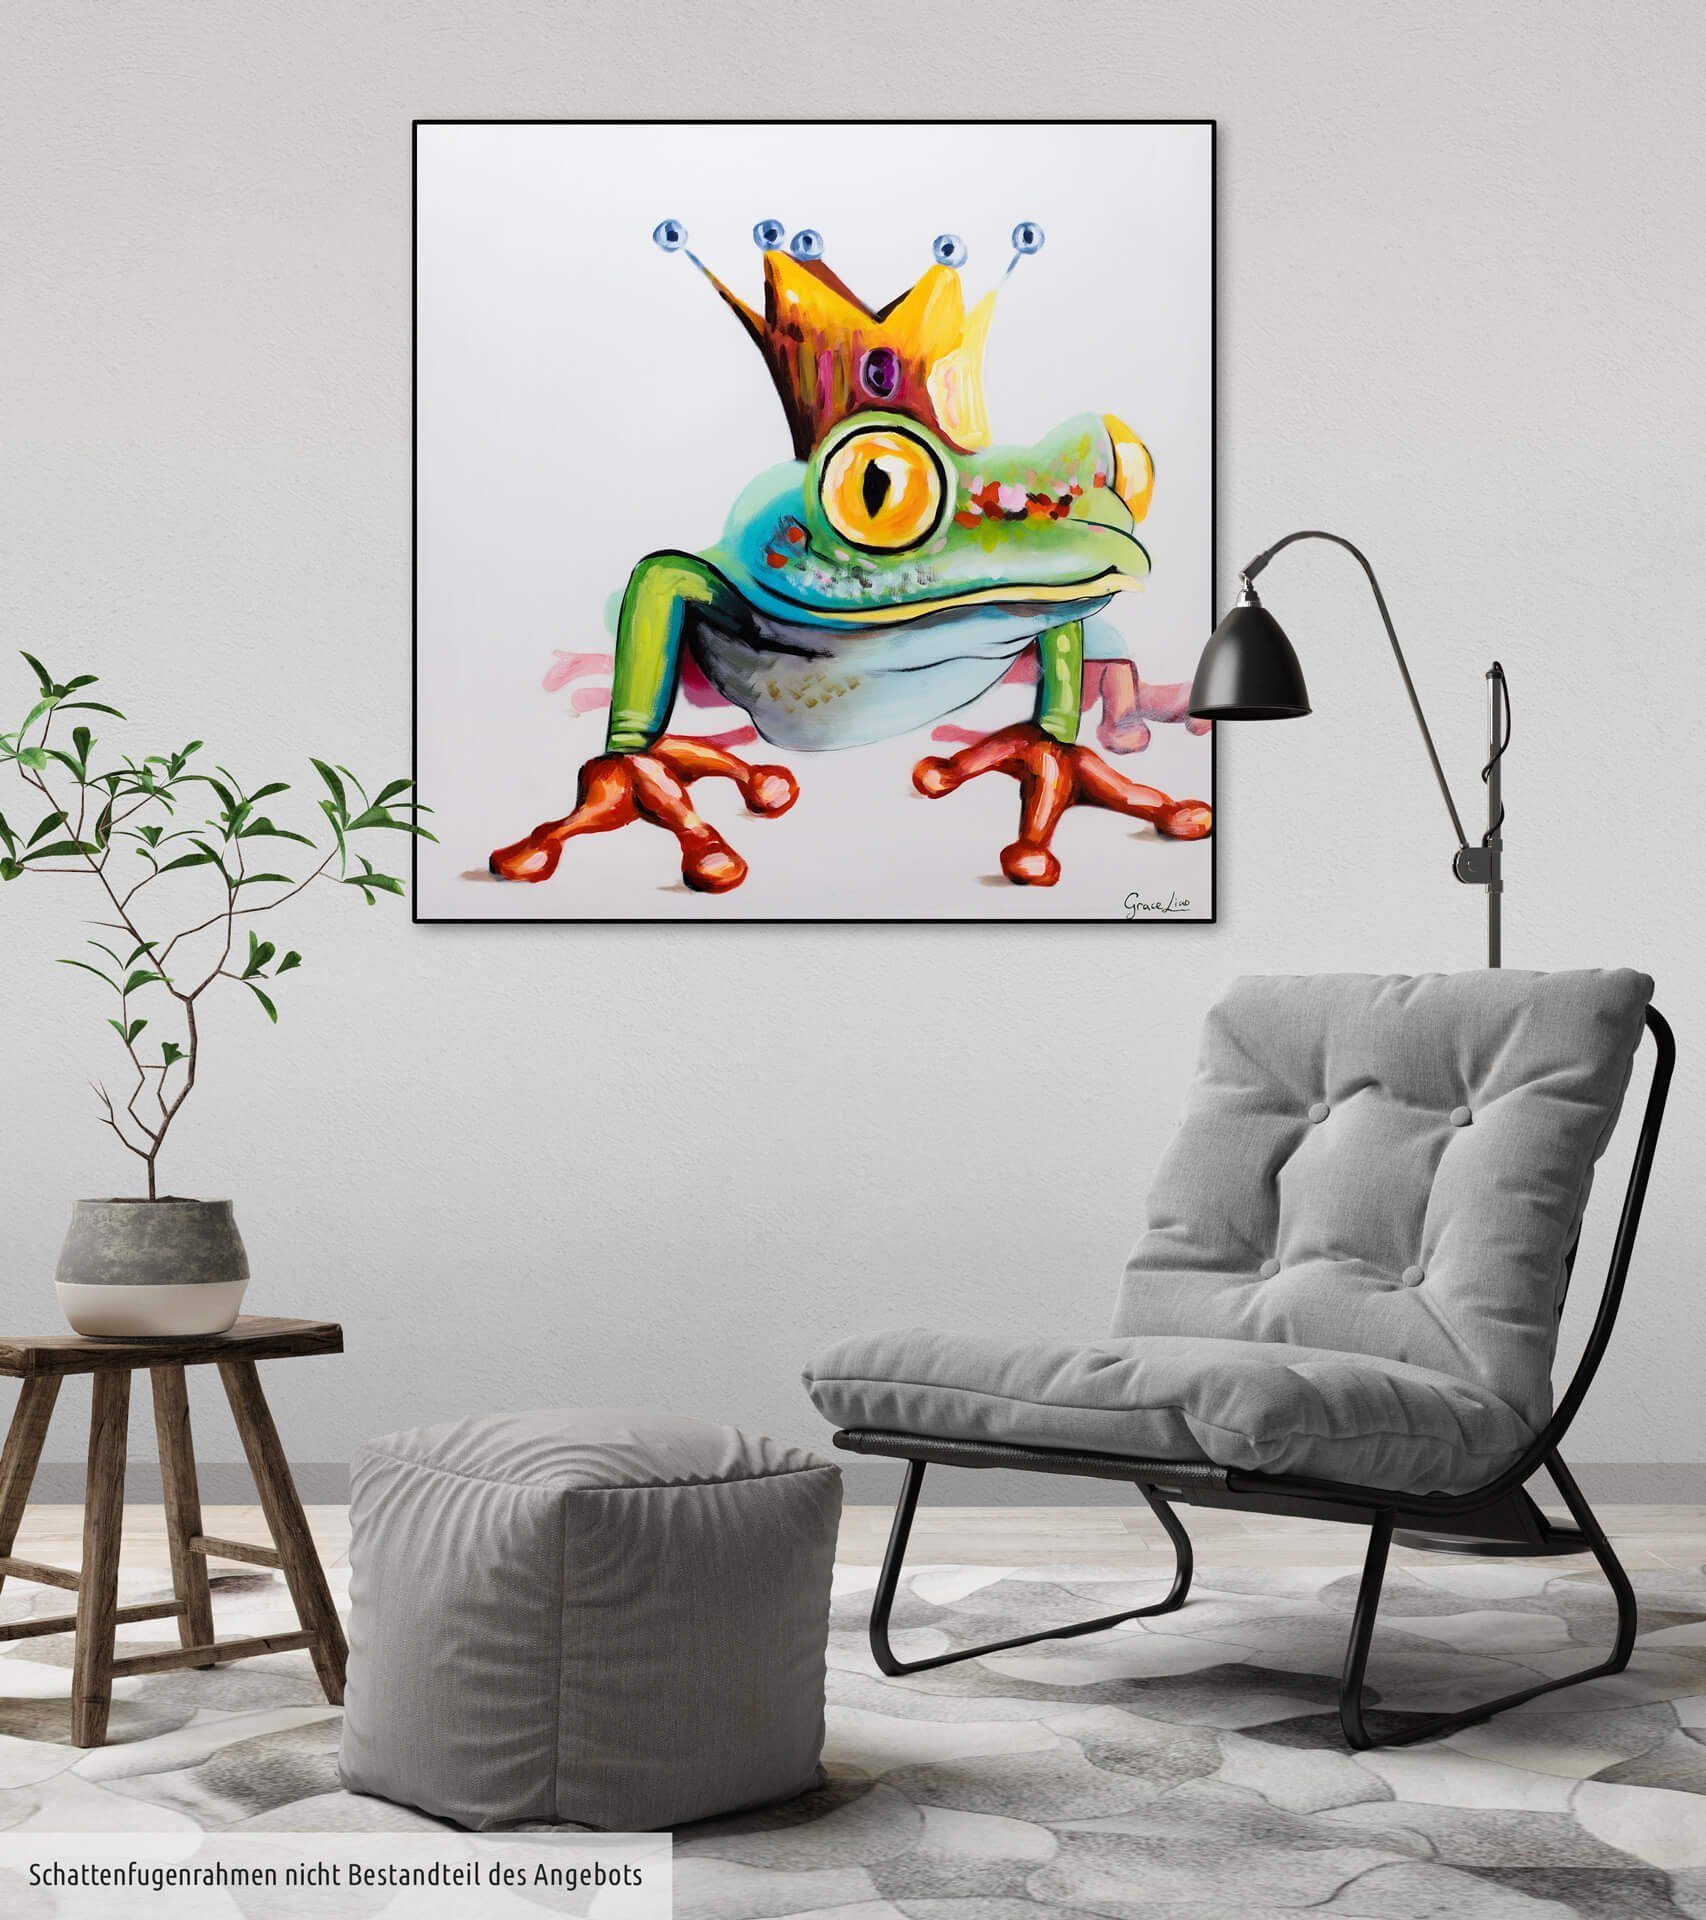 100% cm, KUNSTLOFT HANDGEMALT 80x80 Wandbild Wohnzimmer Gemälde Froschkönig Leinwandbild